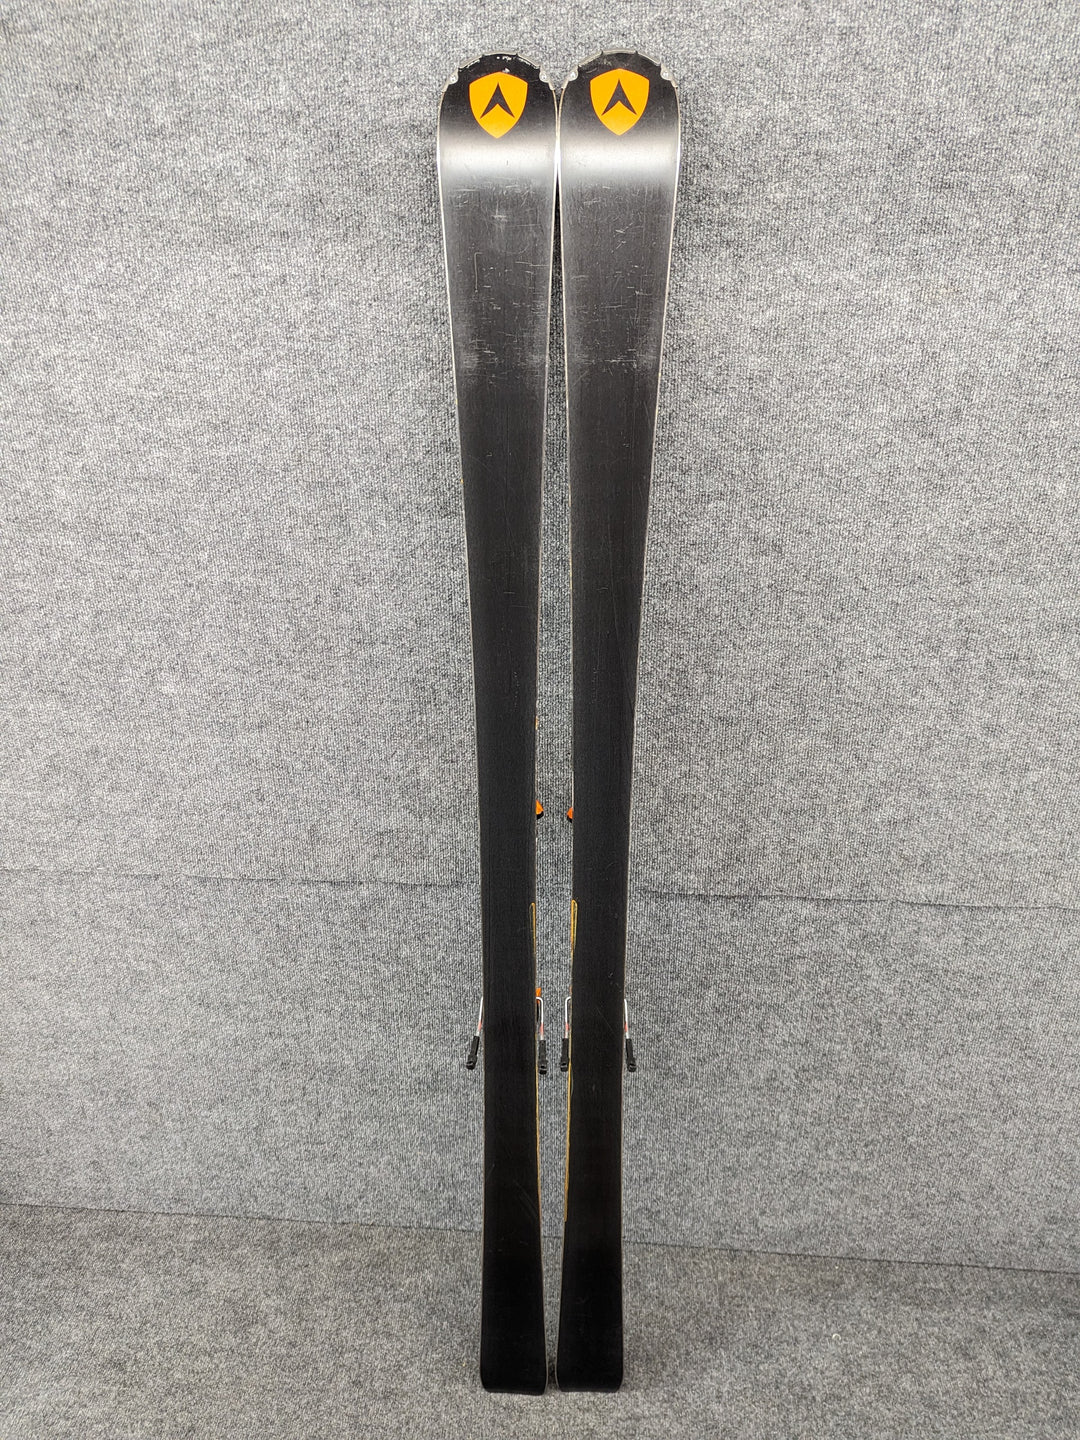 Dynastar Length 182 cm/71.5" Alpine Skis